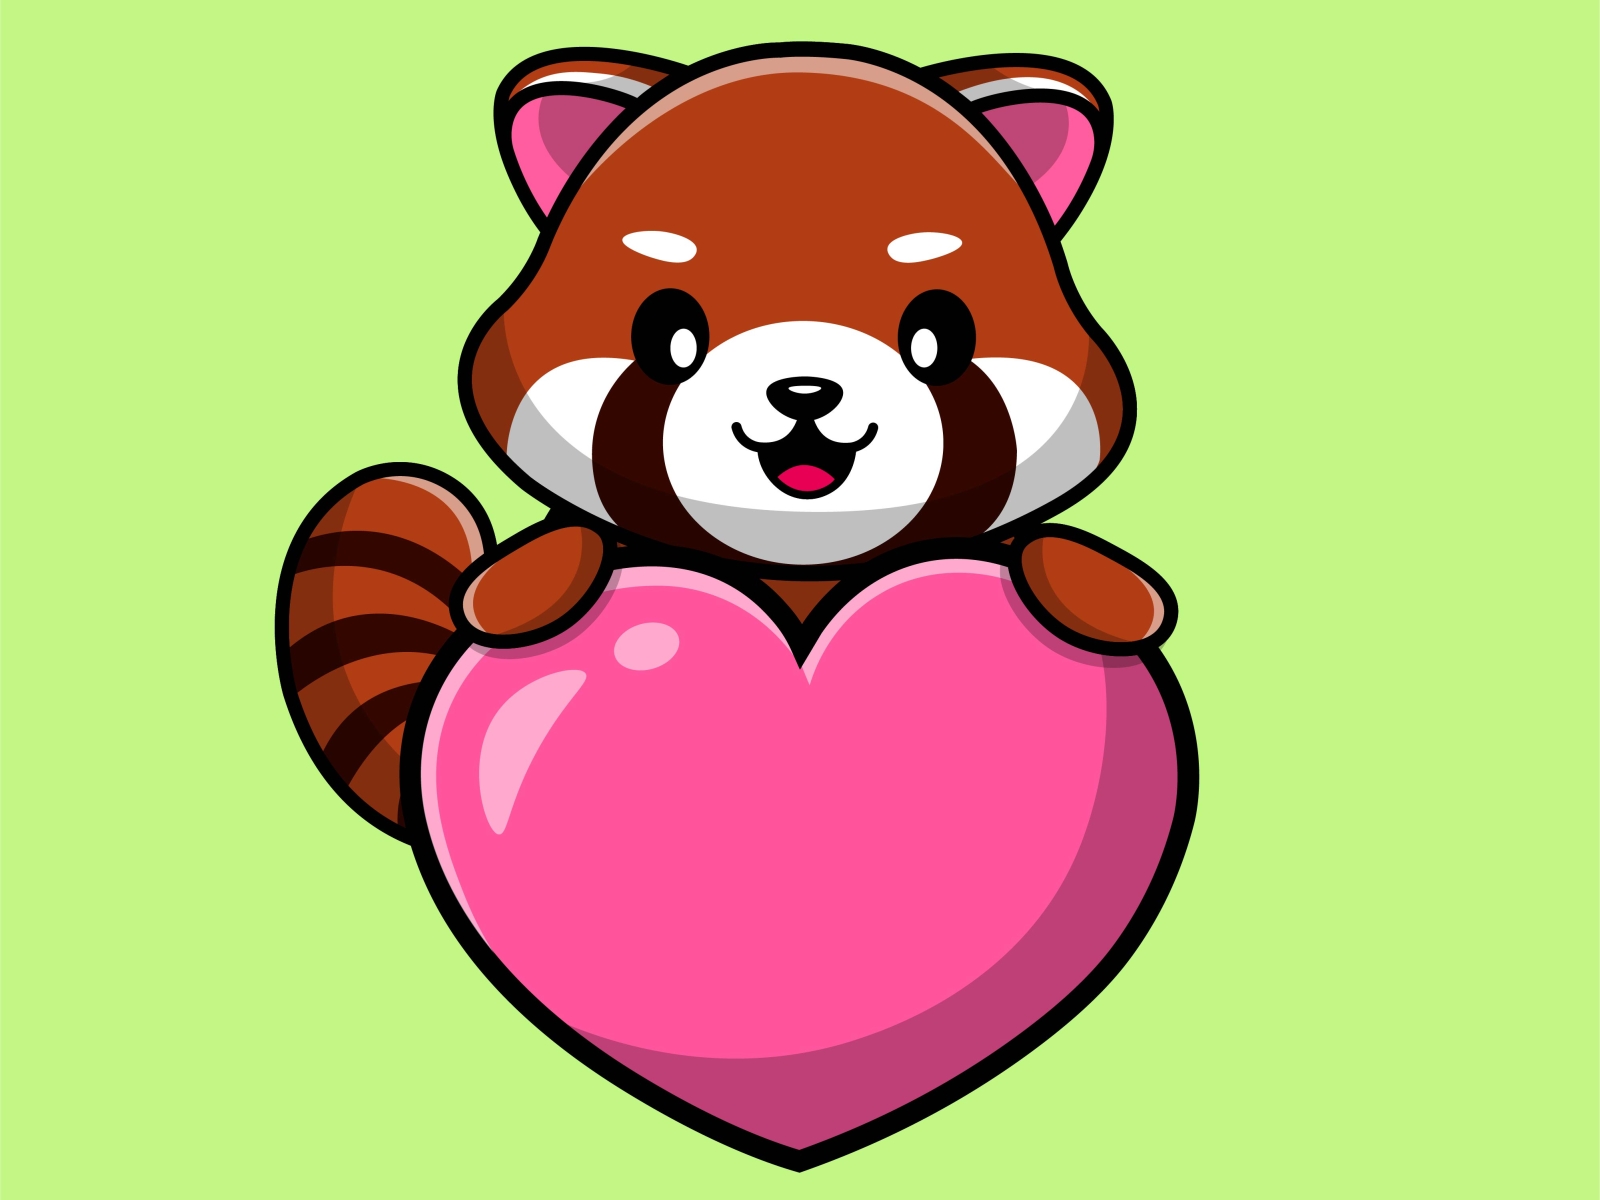 Cute Red Panda Love by Moksha Labs on Dribbble